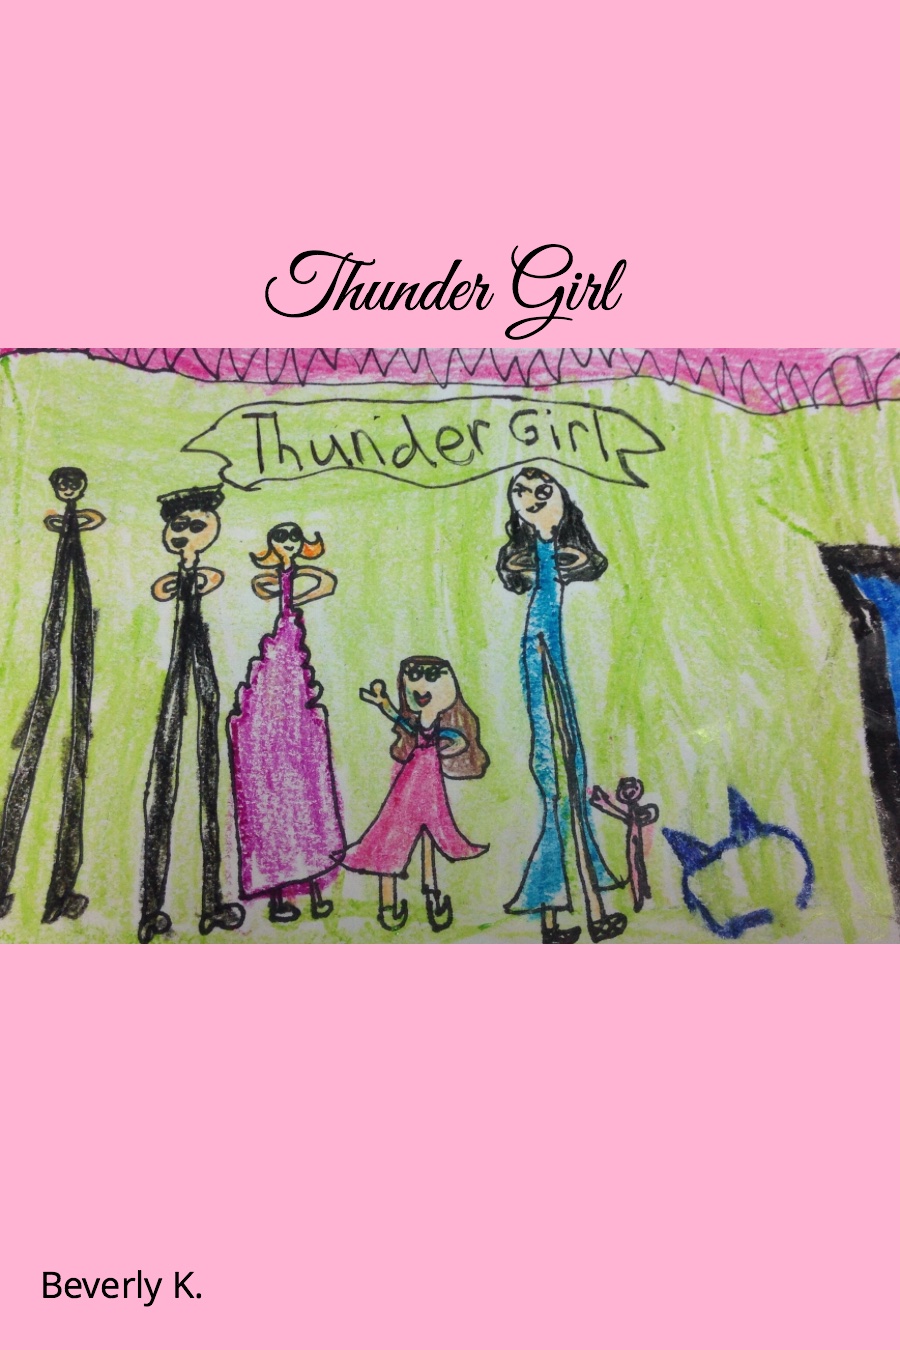 Thundergirl by Beverly K